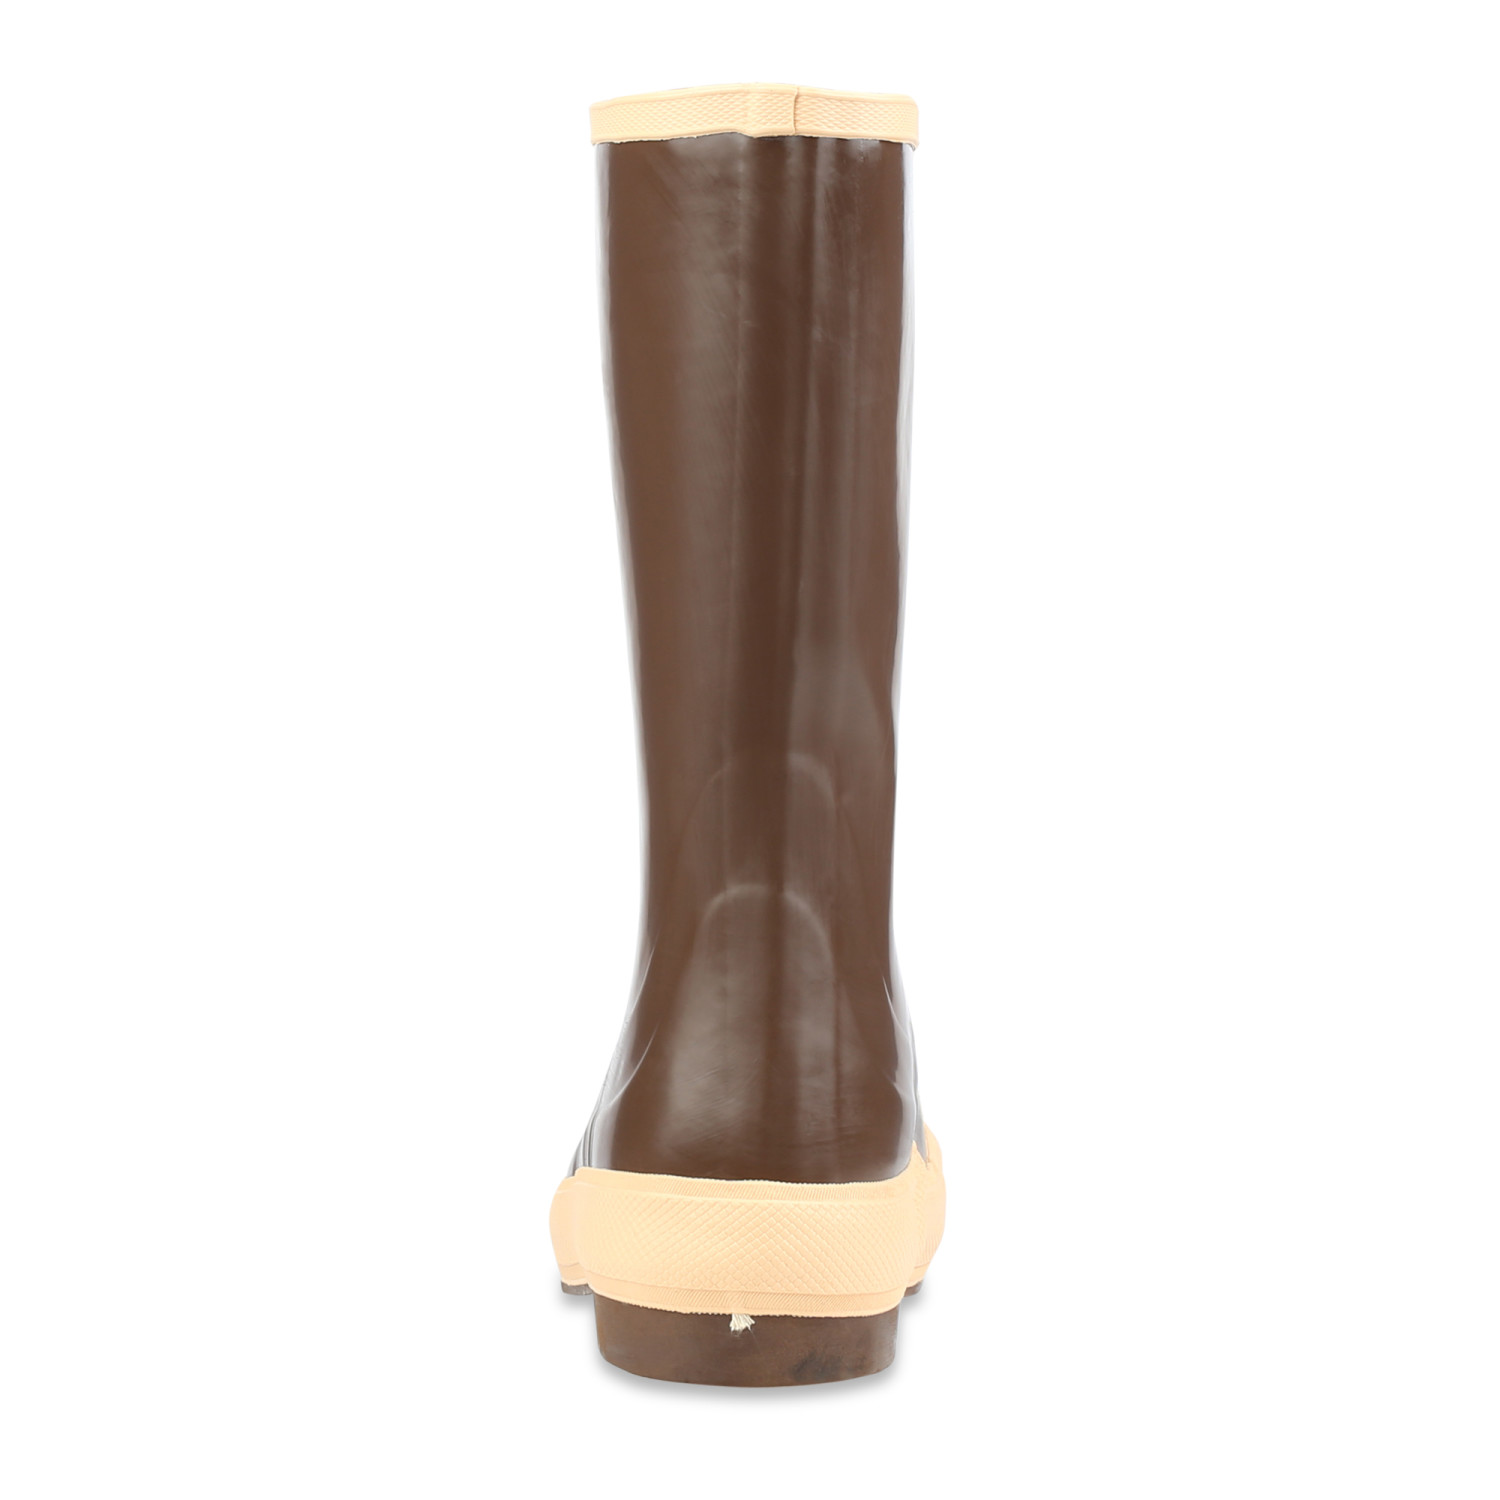 Servus 12 in Steel Toe Neoprene Safety Boot Size 11(M) - image 4 of 6